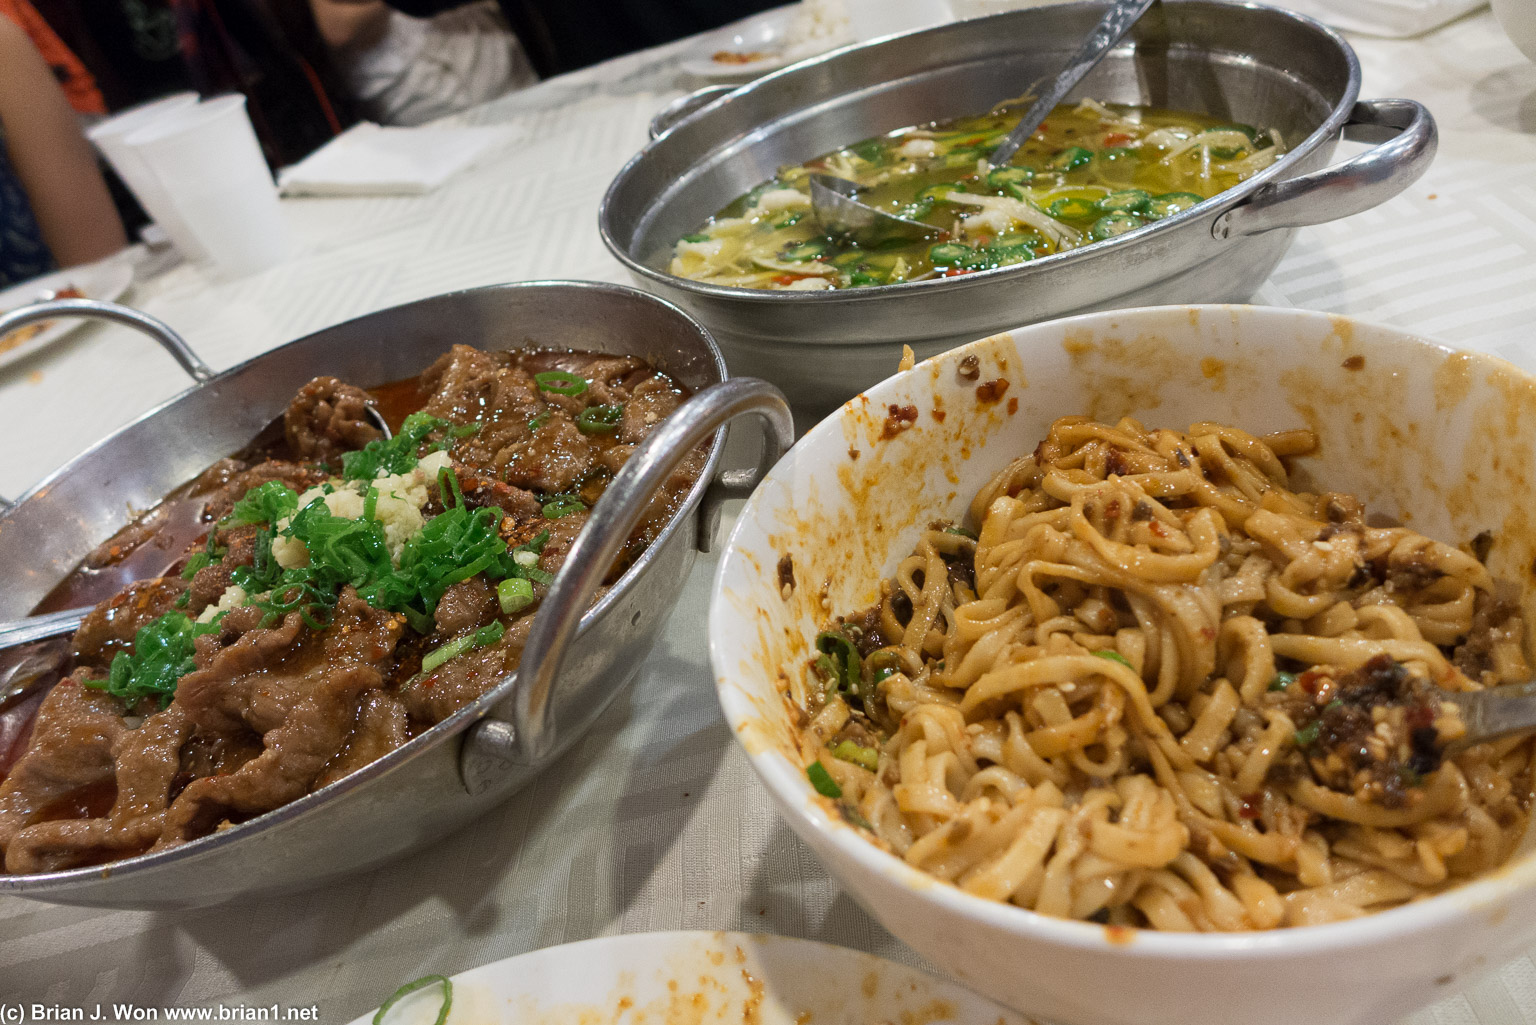 The best dishes so far. Beef, fish, dan dan noodles.